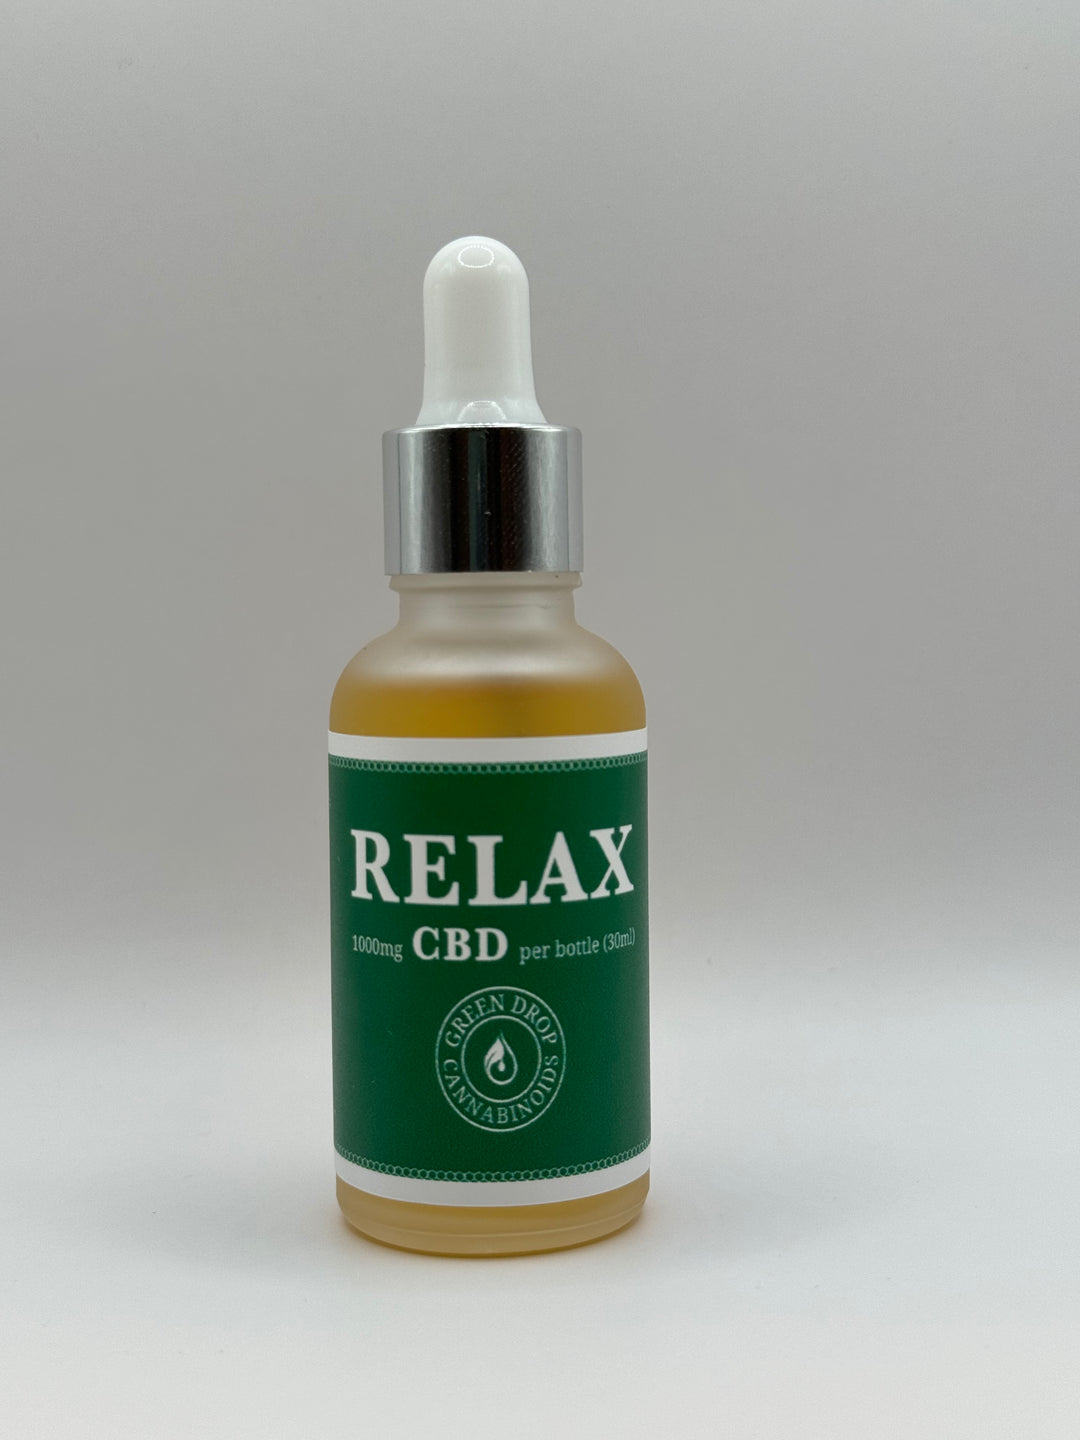 Green Drop Cannabinoids "Relax" 1000mg Full Spectrum CBD Oil Tincture